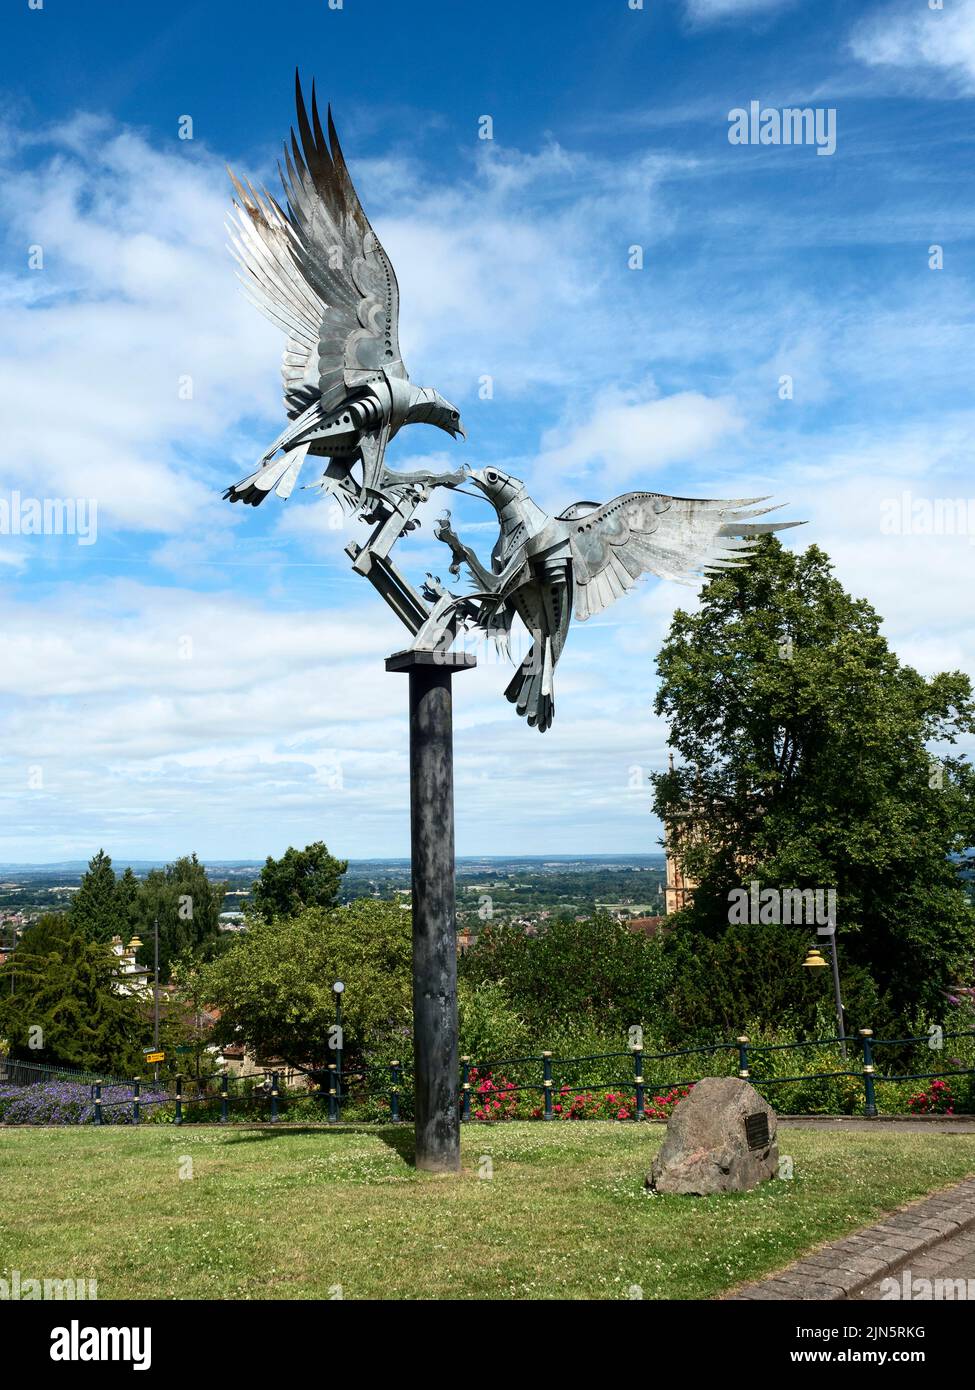 Malvern Buzzards sculpture de Walterty Pytel dans les jardins de Rosebank Great Malvern Worcestershire Angleterre Banque D'Images